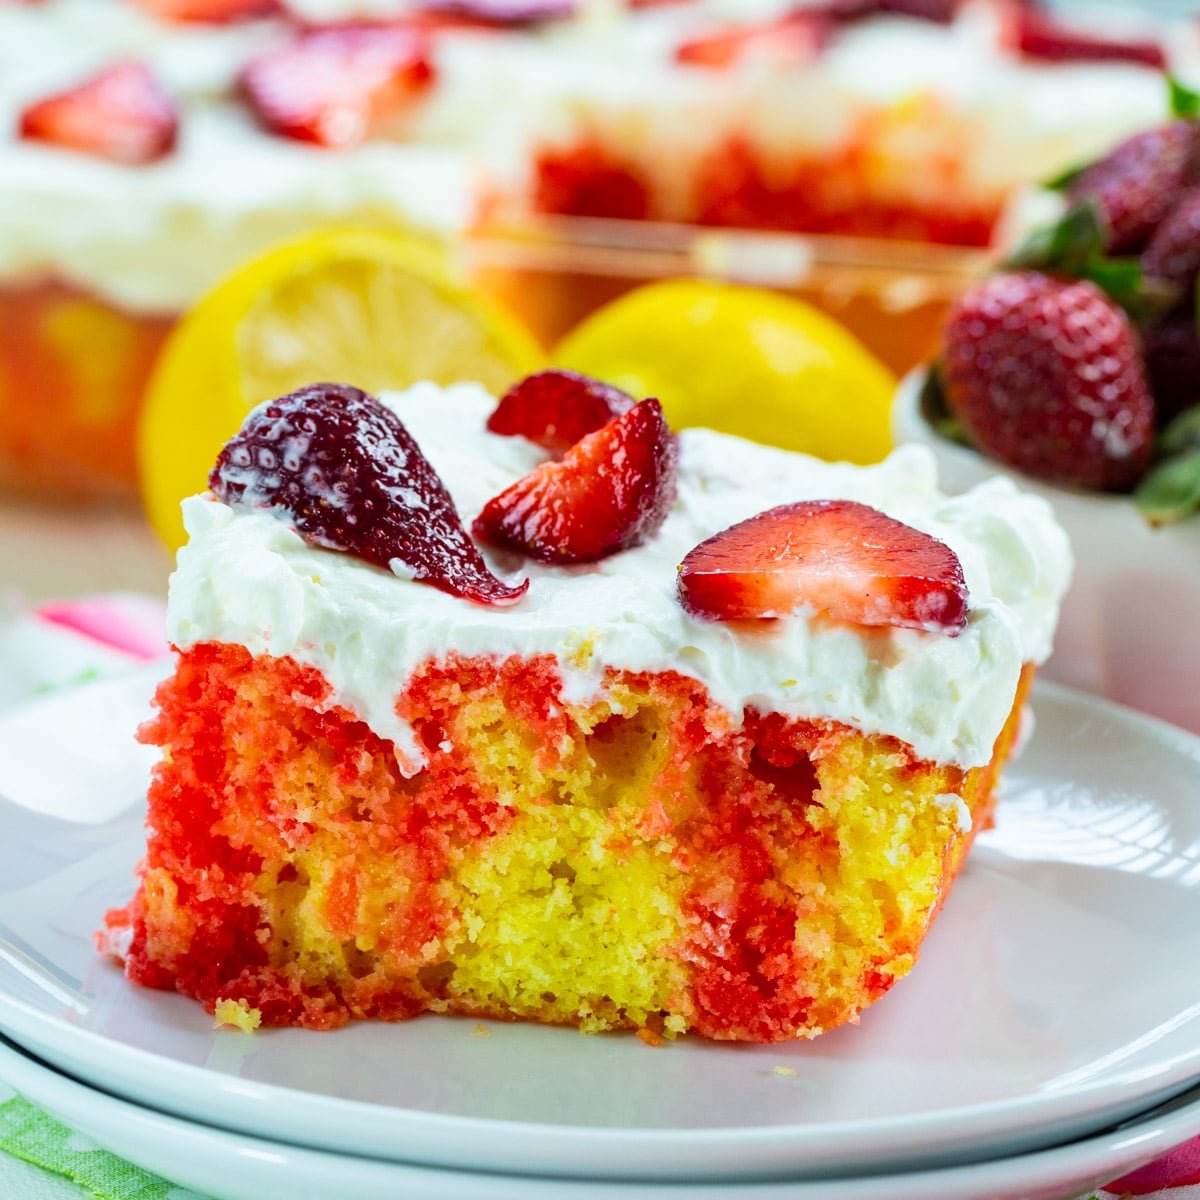 Slice of Strawberry Lemonade Poke Cake on plate.